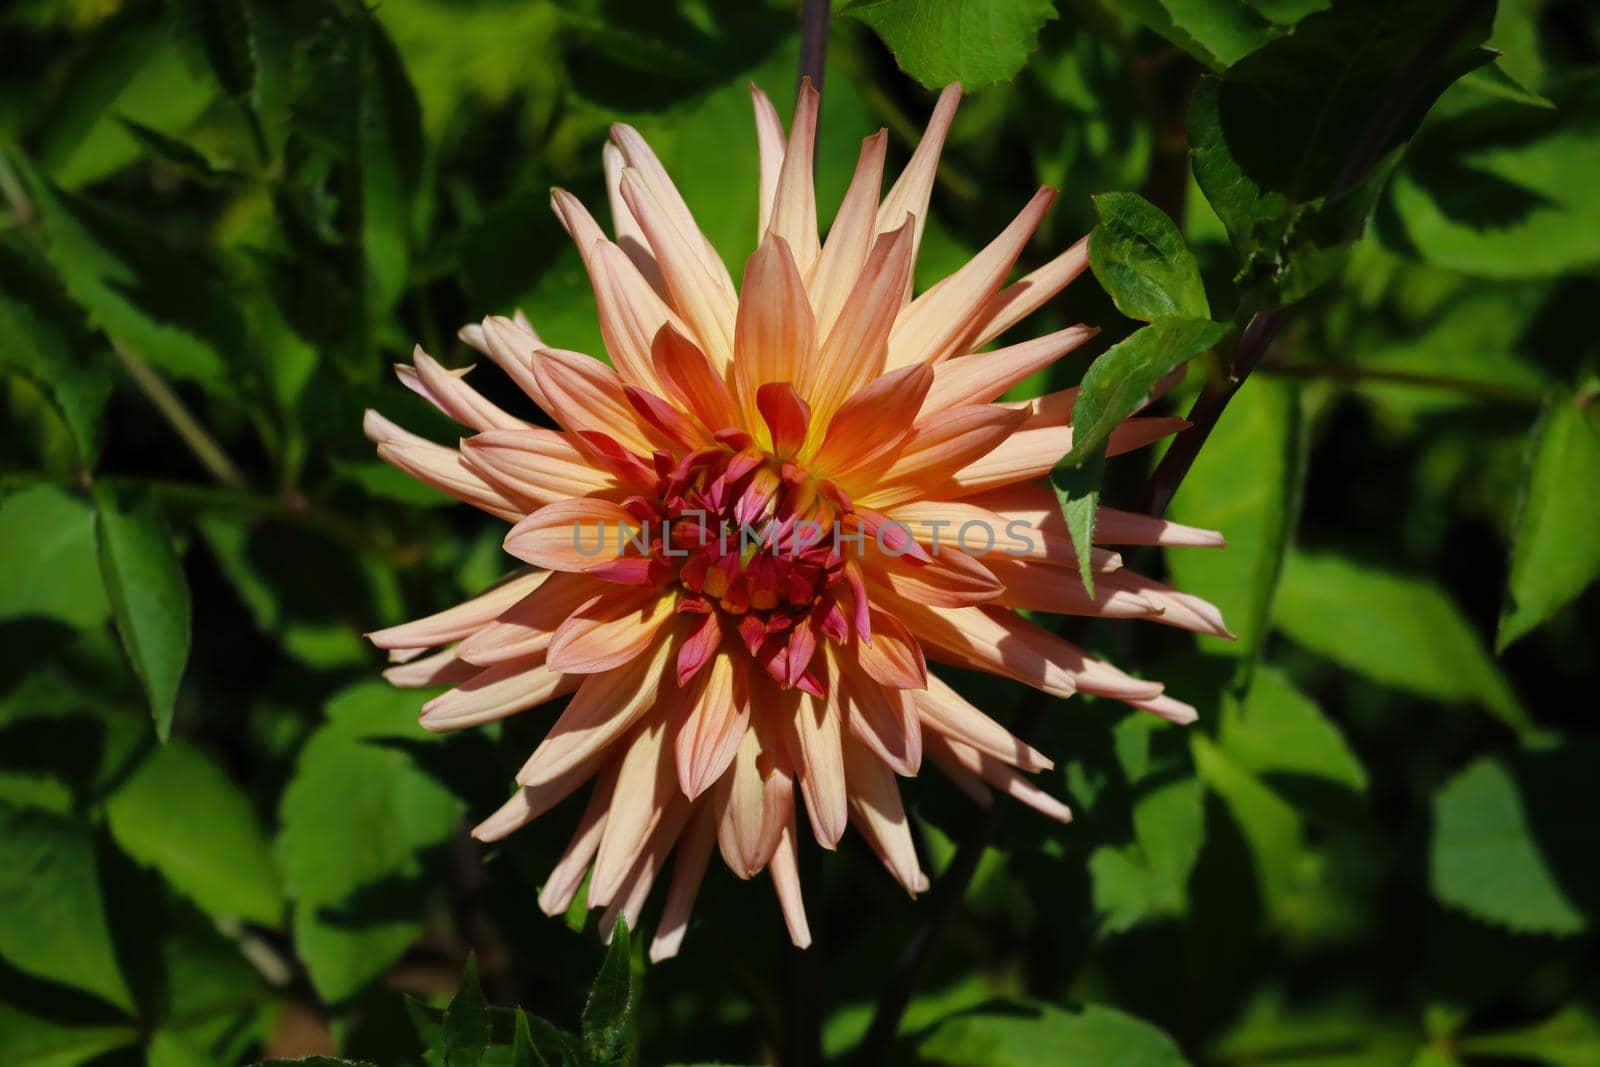 Bud Dahlia flower close up in the garden